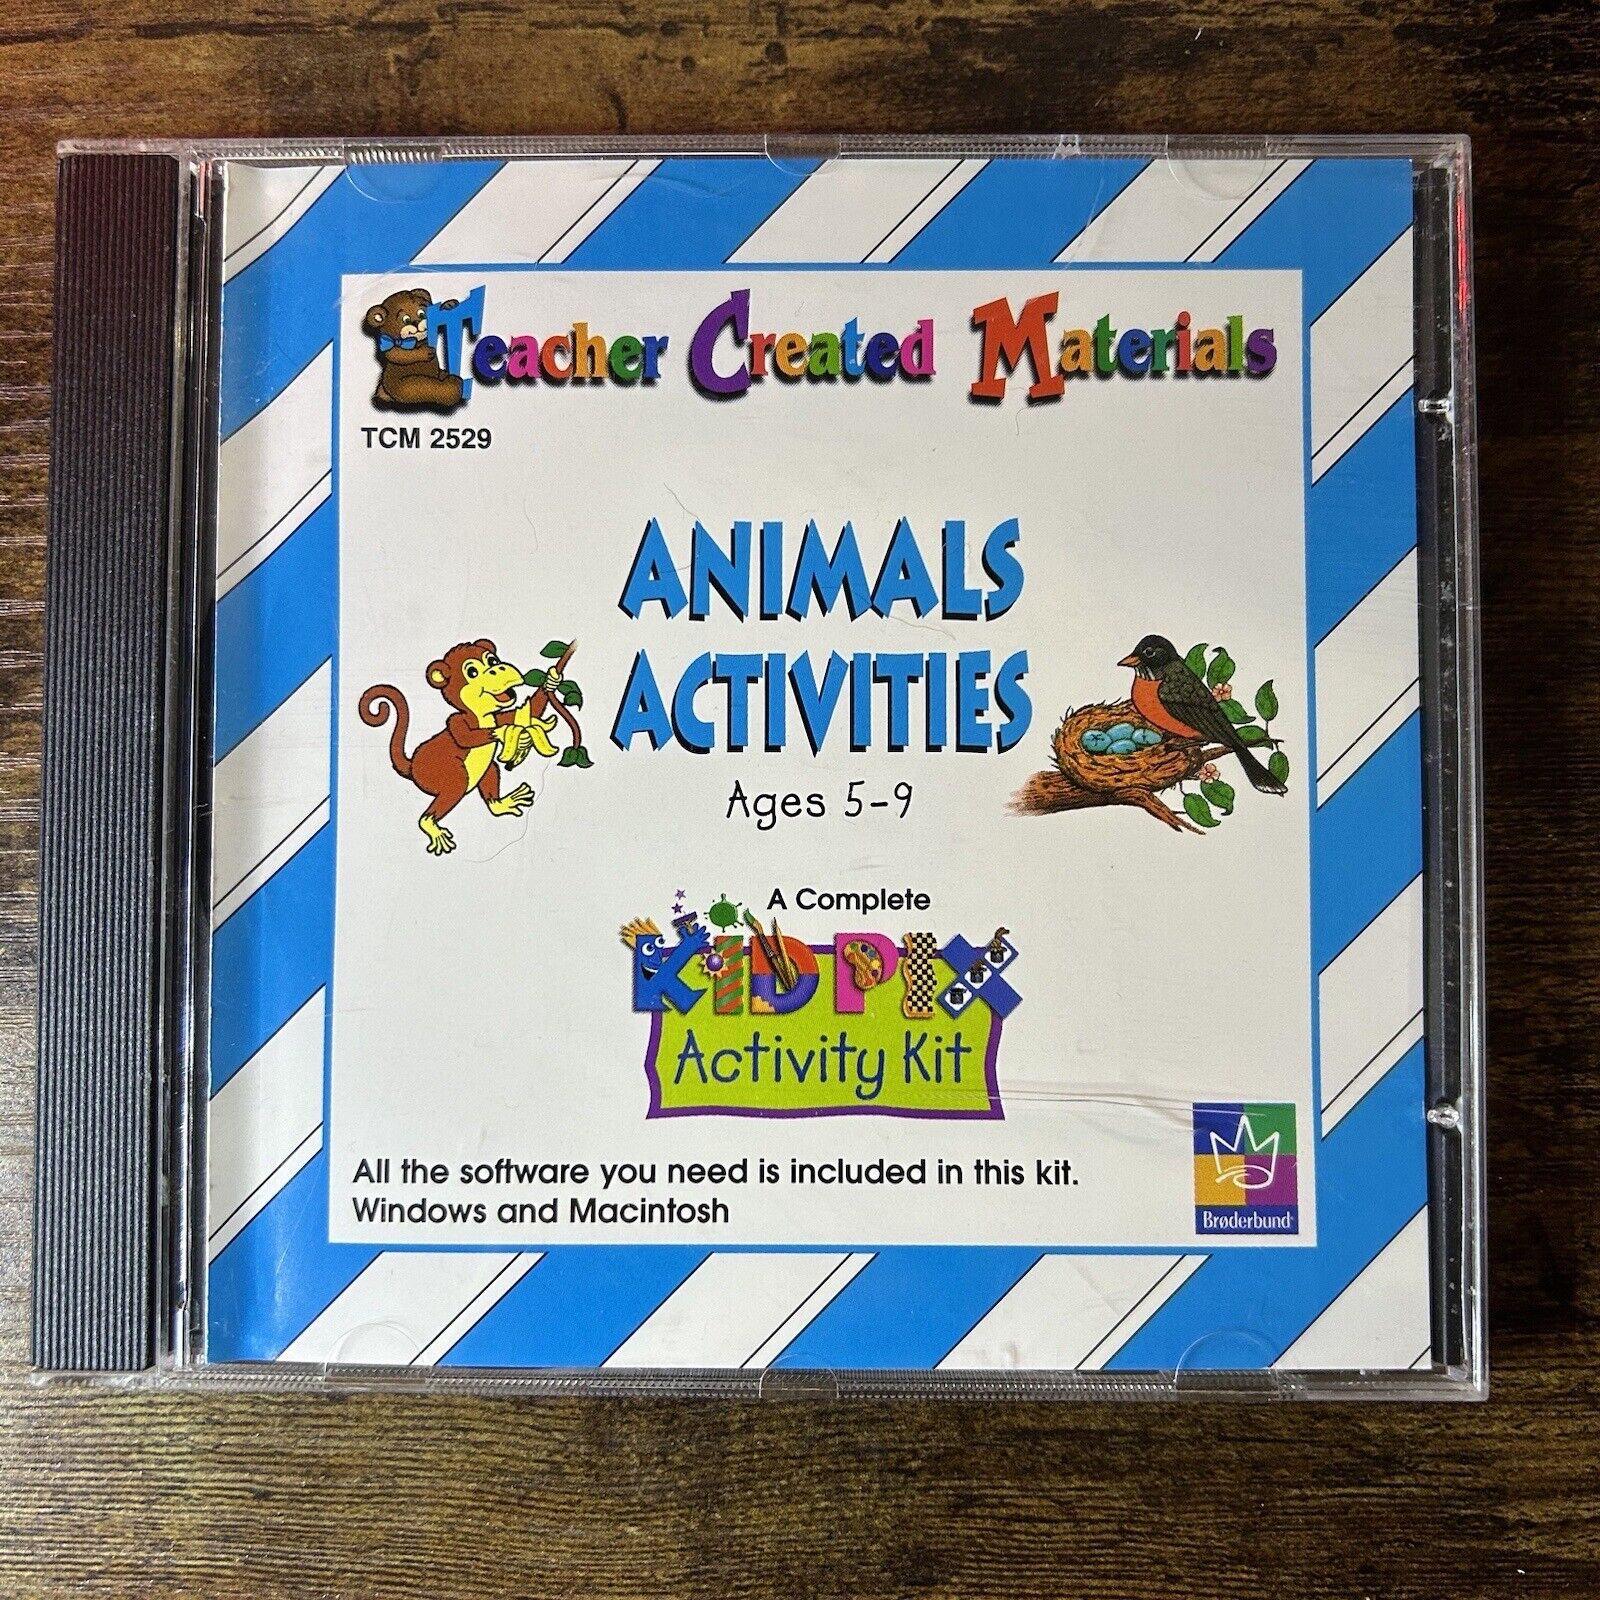 Animals Activities CD Rom Teacher Created Materials Activity Kit 1999 Vintage